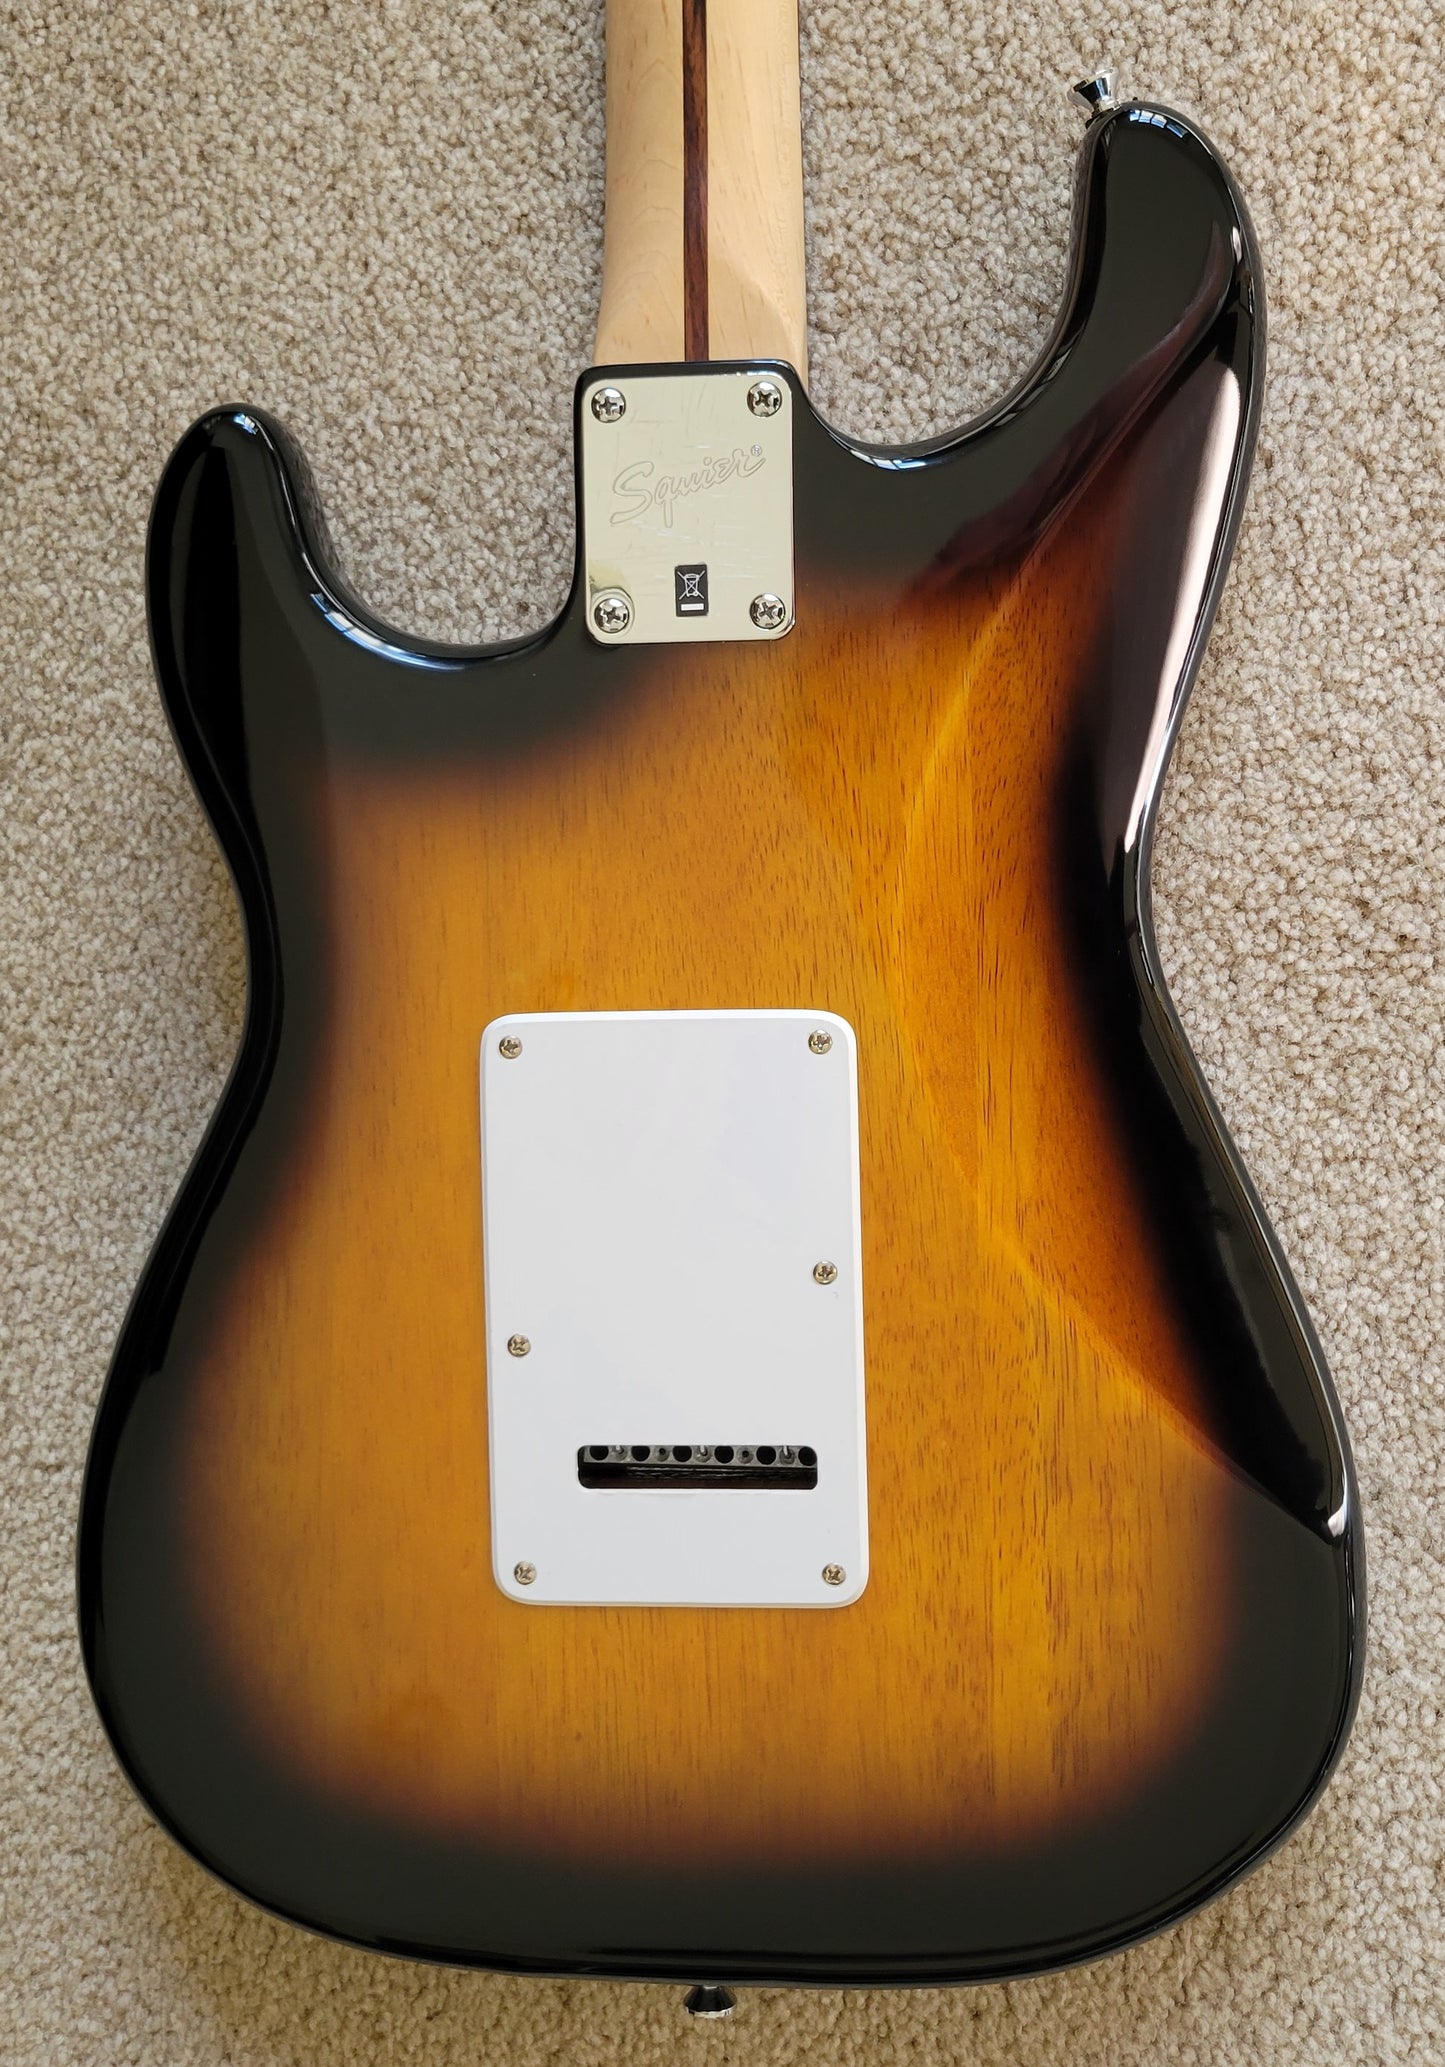 Fender Squier Bullet Stratocaster HSS Electric Guitar, Brown Sunburst, Hard Shell Case